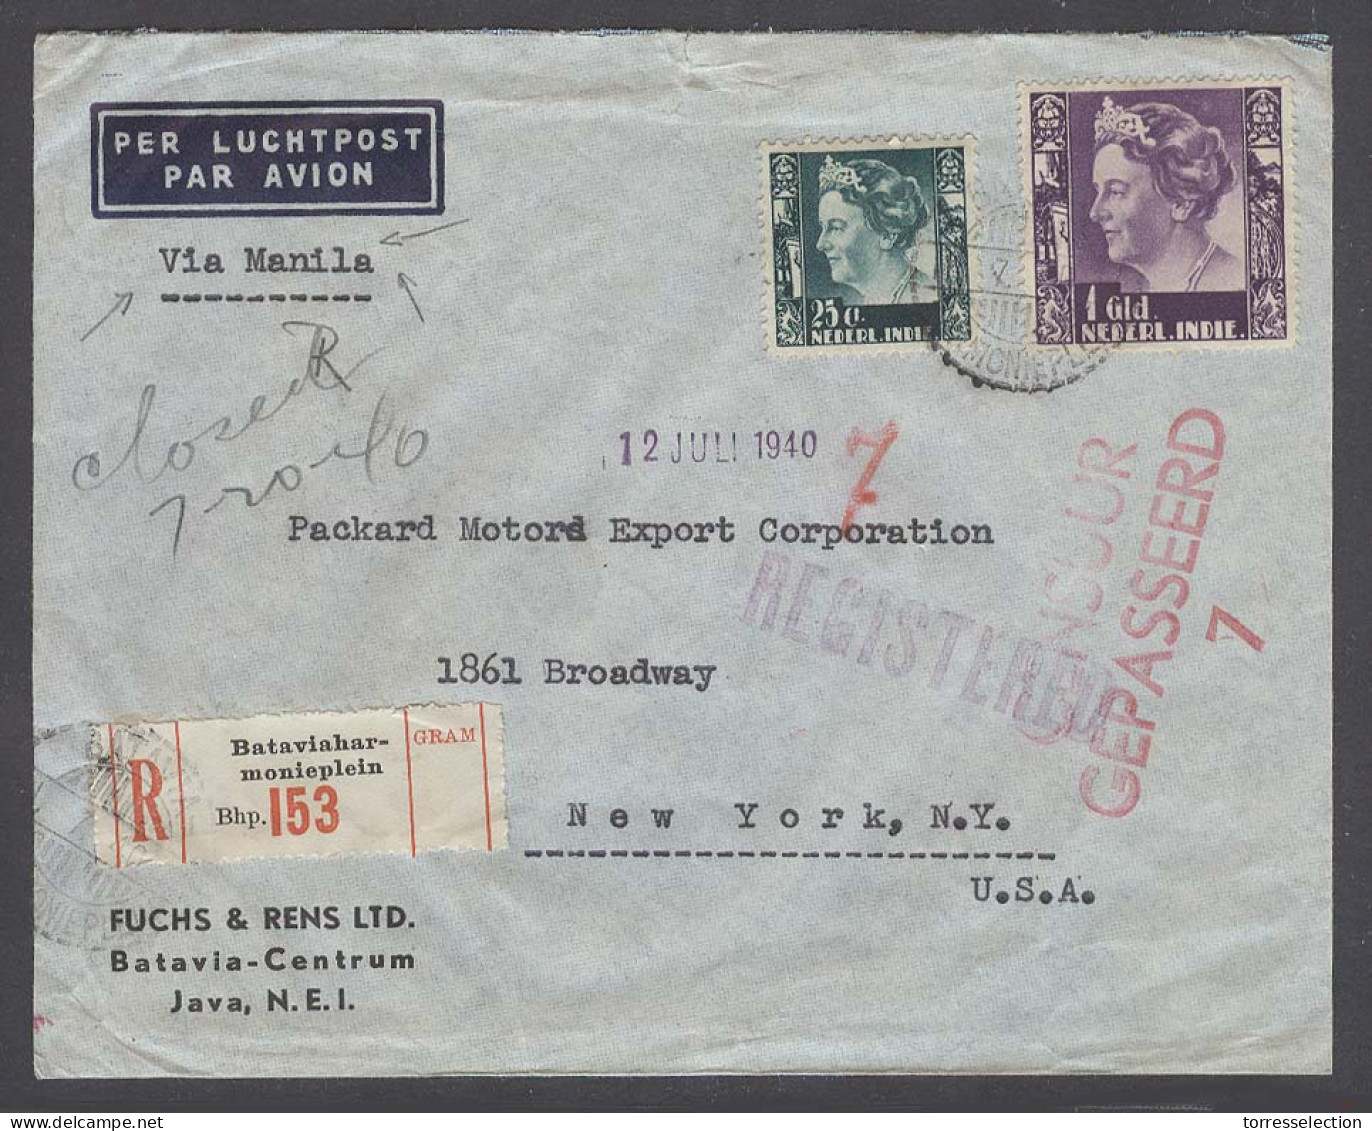 DUTCH INDIES. 1940 (12 July). Batavia Harmonieplein - USA / NY (19 July). Reg Air 1guld 25c Rate Via Manila Hawaii (16 J - Indonesia